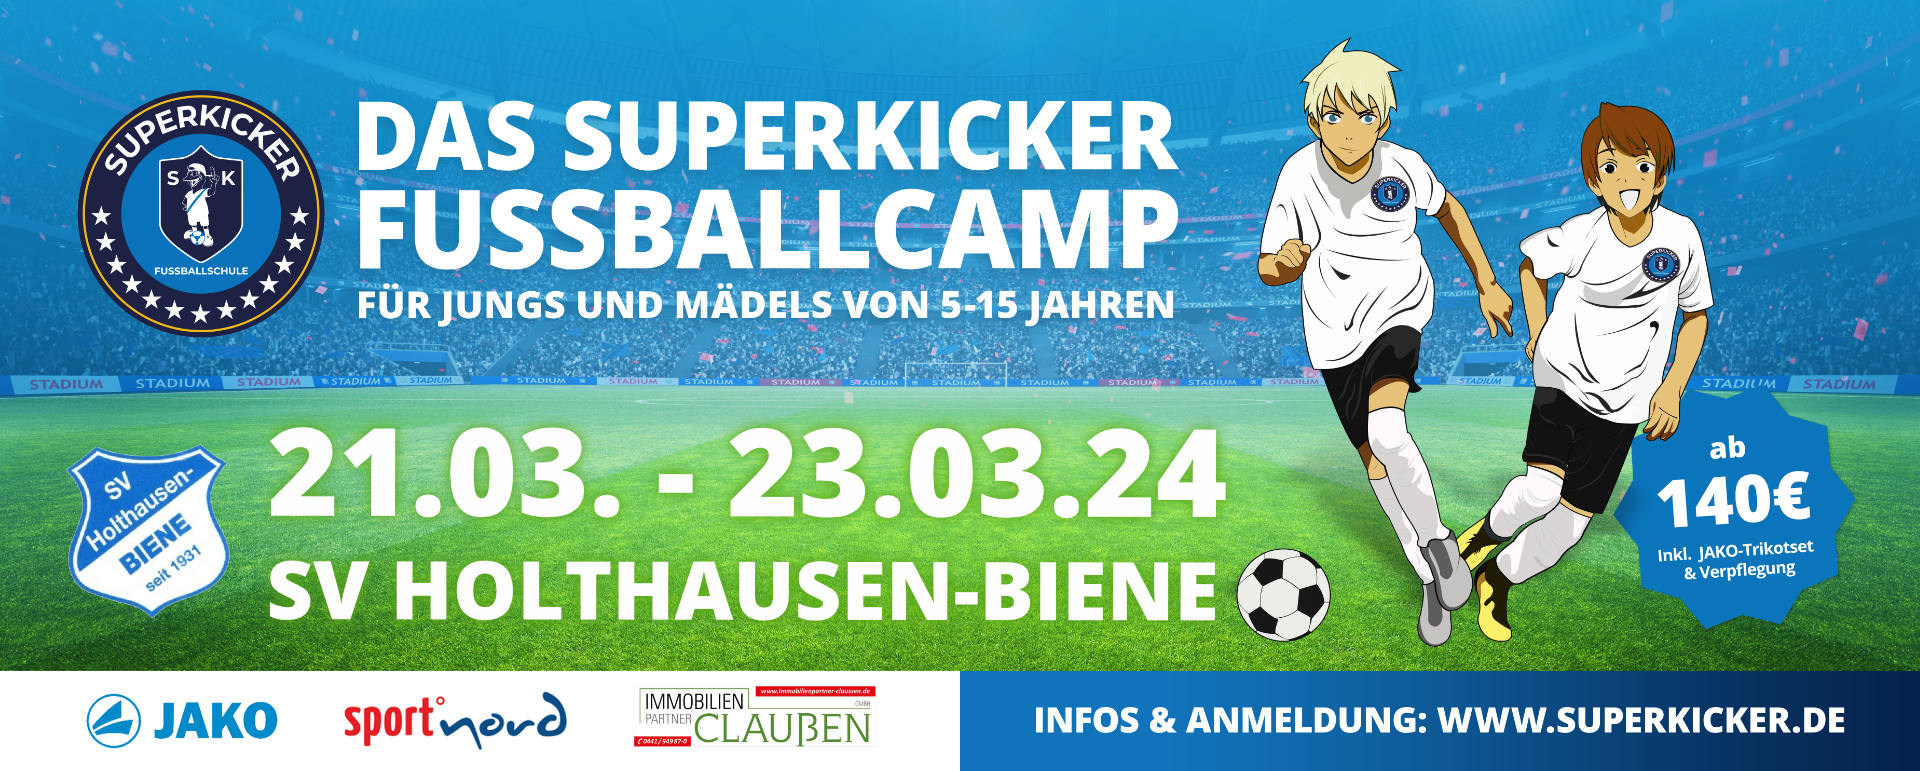 "Superkicker-Fußballcamp